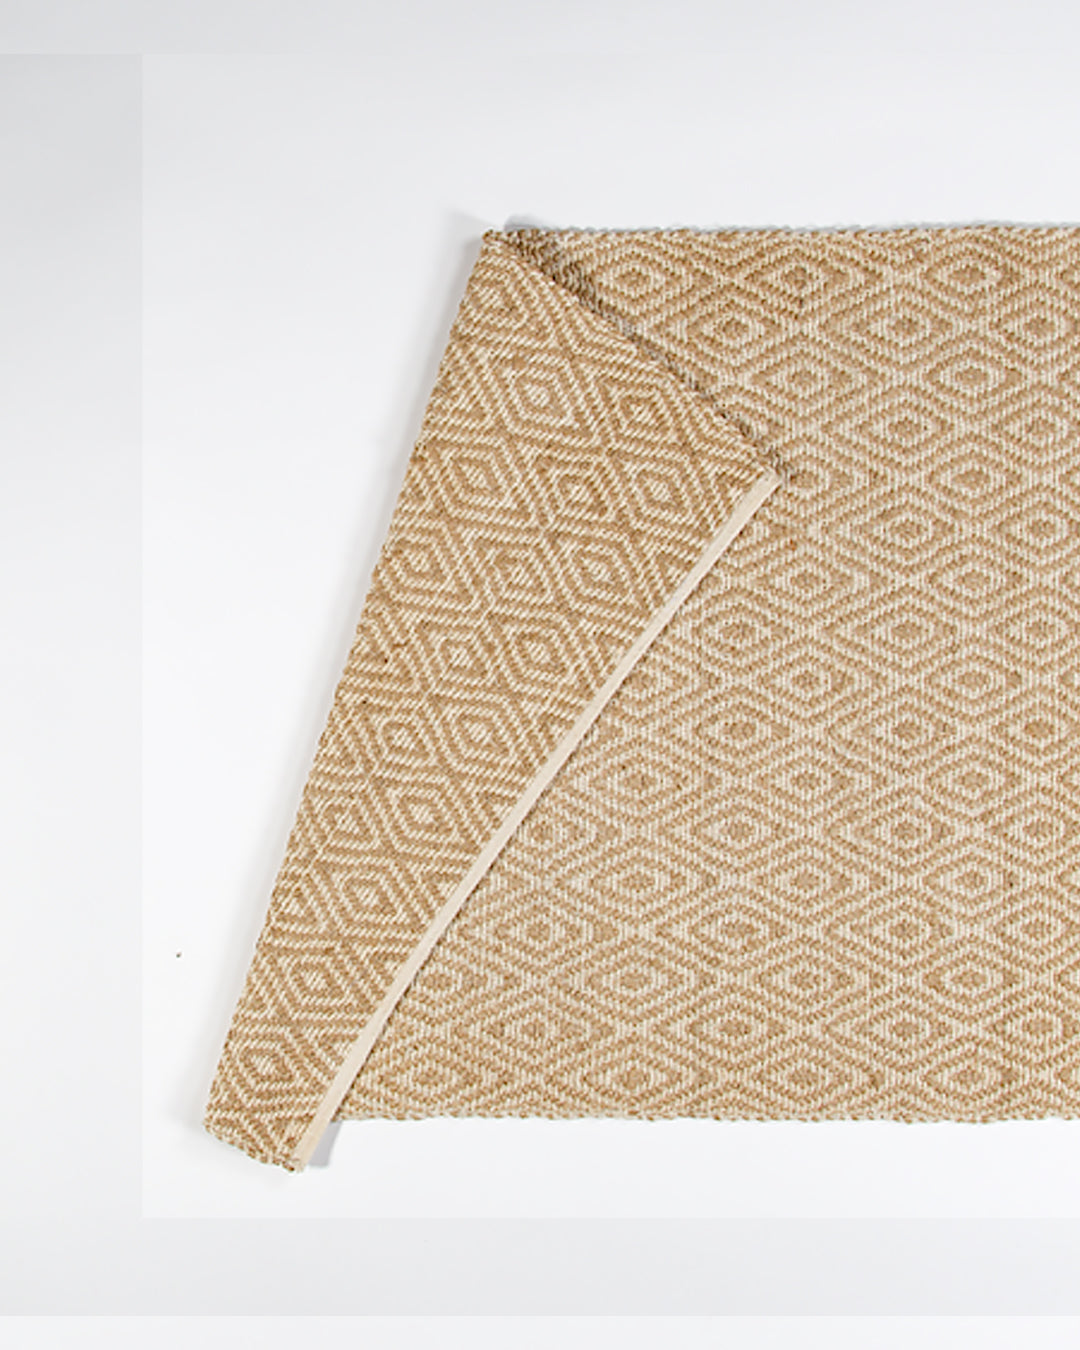 Jute and Cotton Thread Mat, Natural, Diamond Pattern, 60x90cm